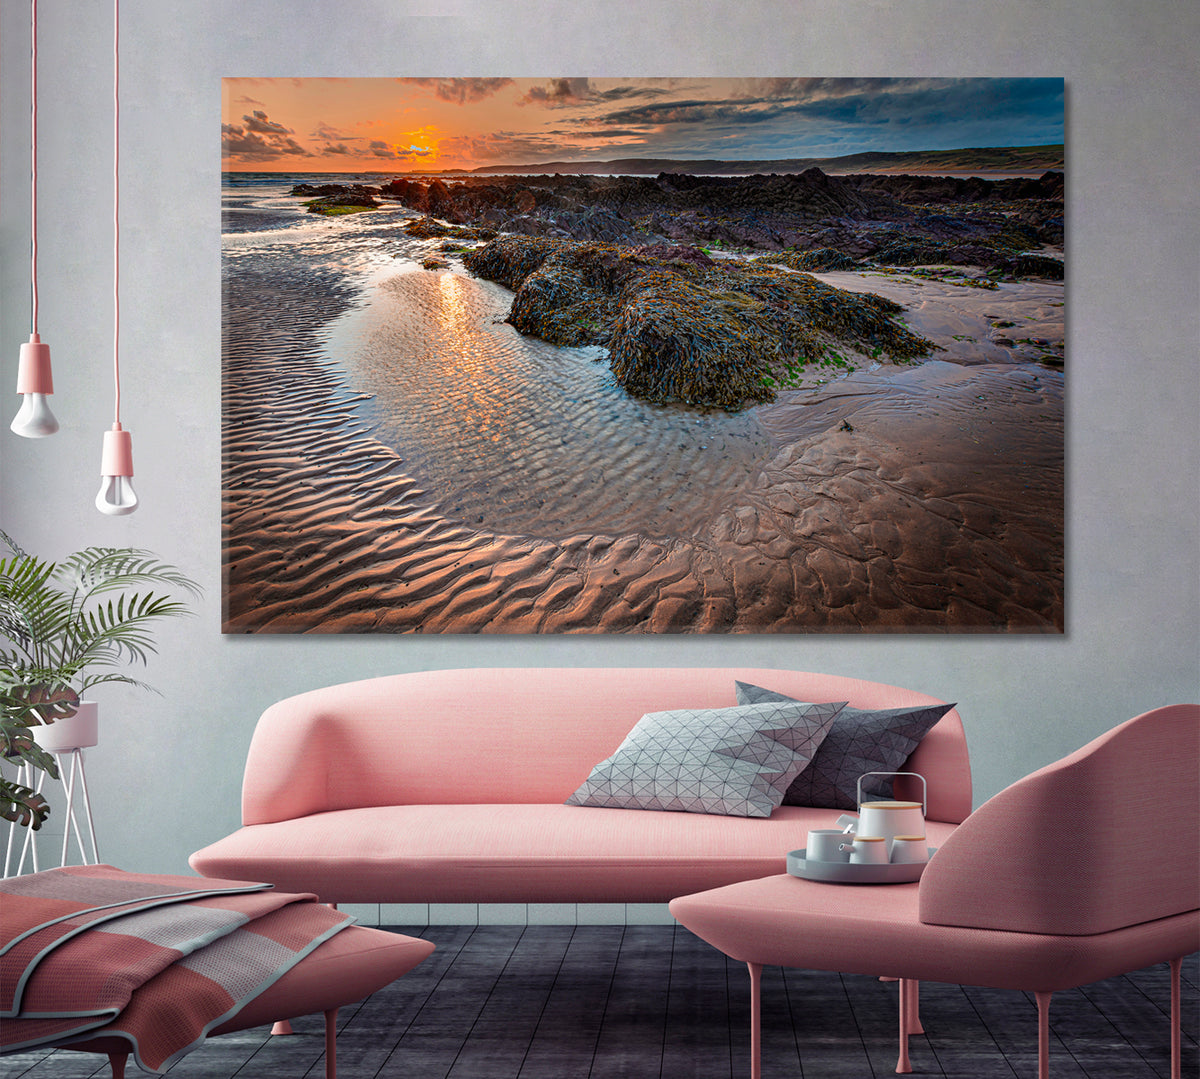 TRANQUILITY Ethereal Sunset Scene Beautiful Rocky Beach Scenery Landscape Fine Art Print Artesty 1 panel 24" x 16" 